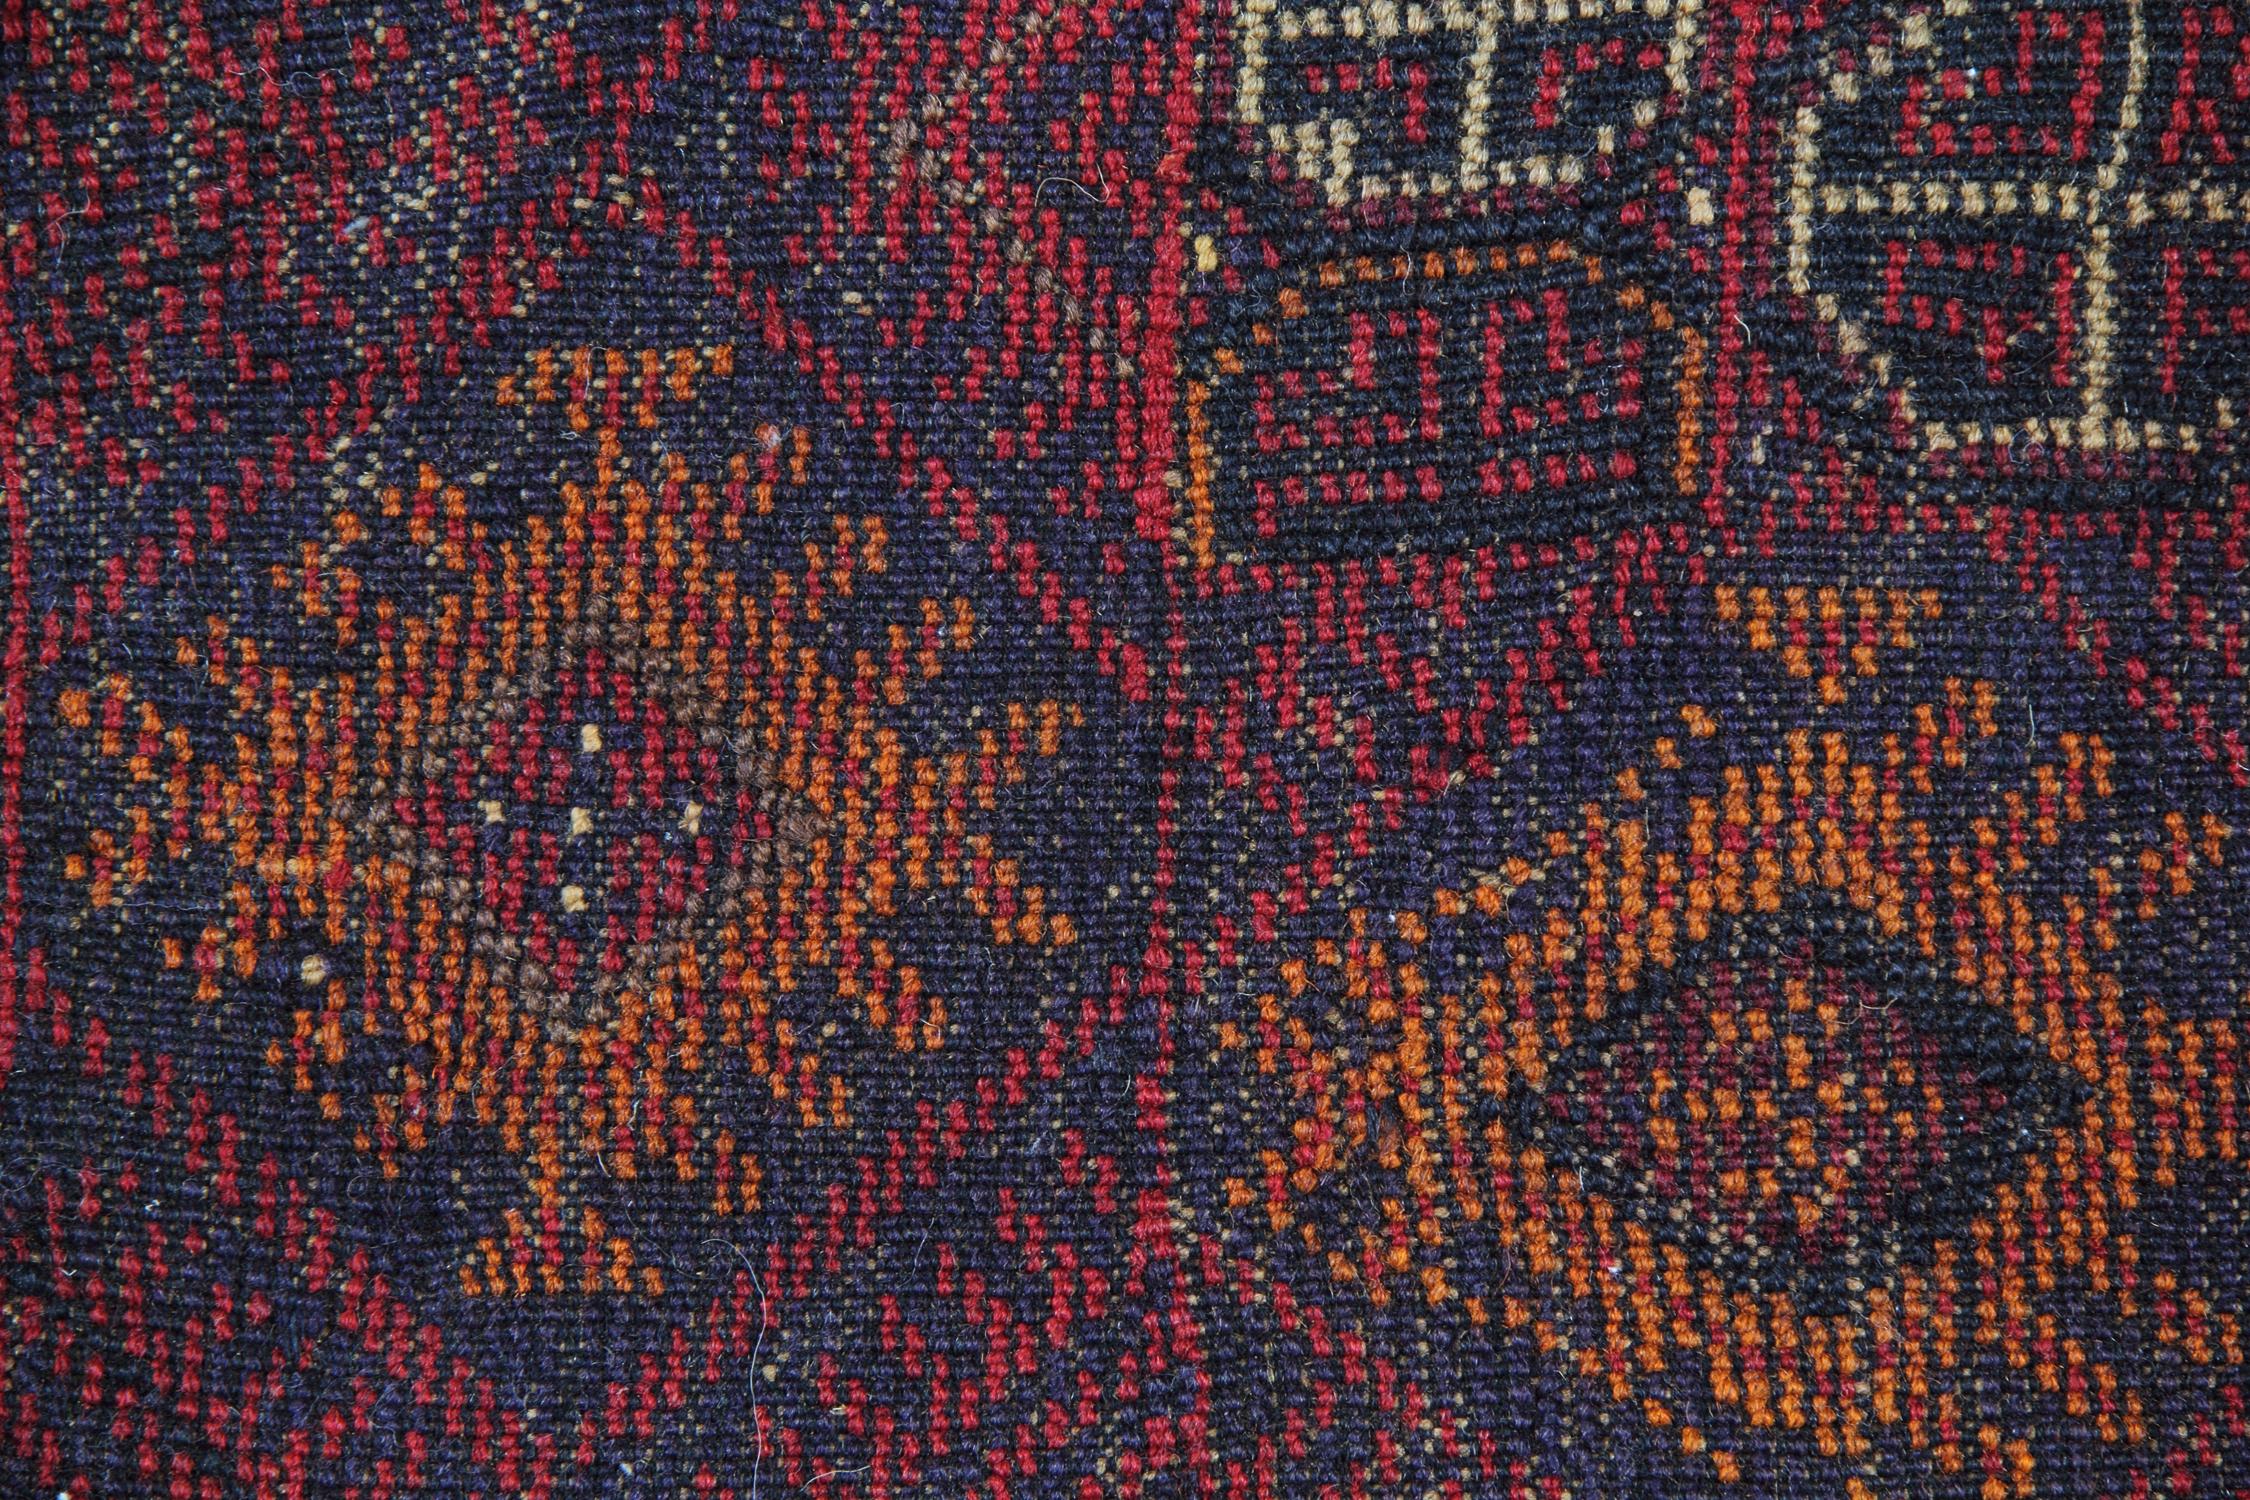 Tribal Wool Handmade Carpet Oriental Rug Traditional Deep Red Rugs Square Turkmen